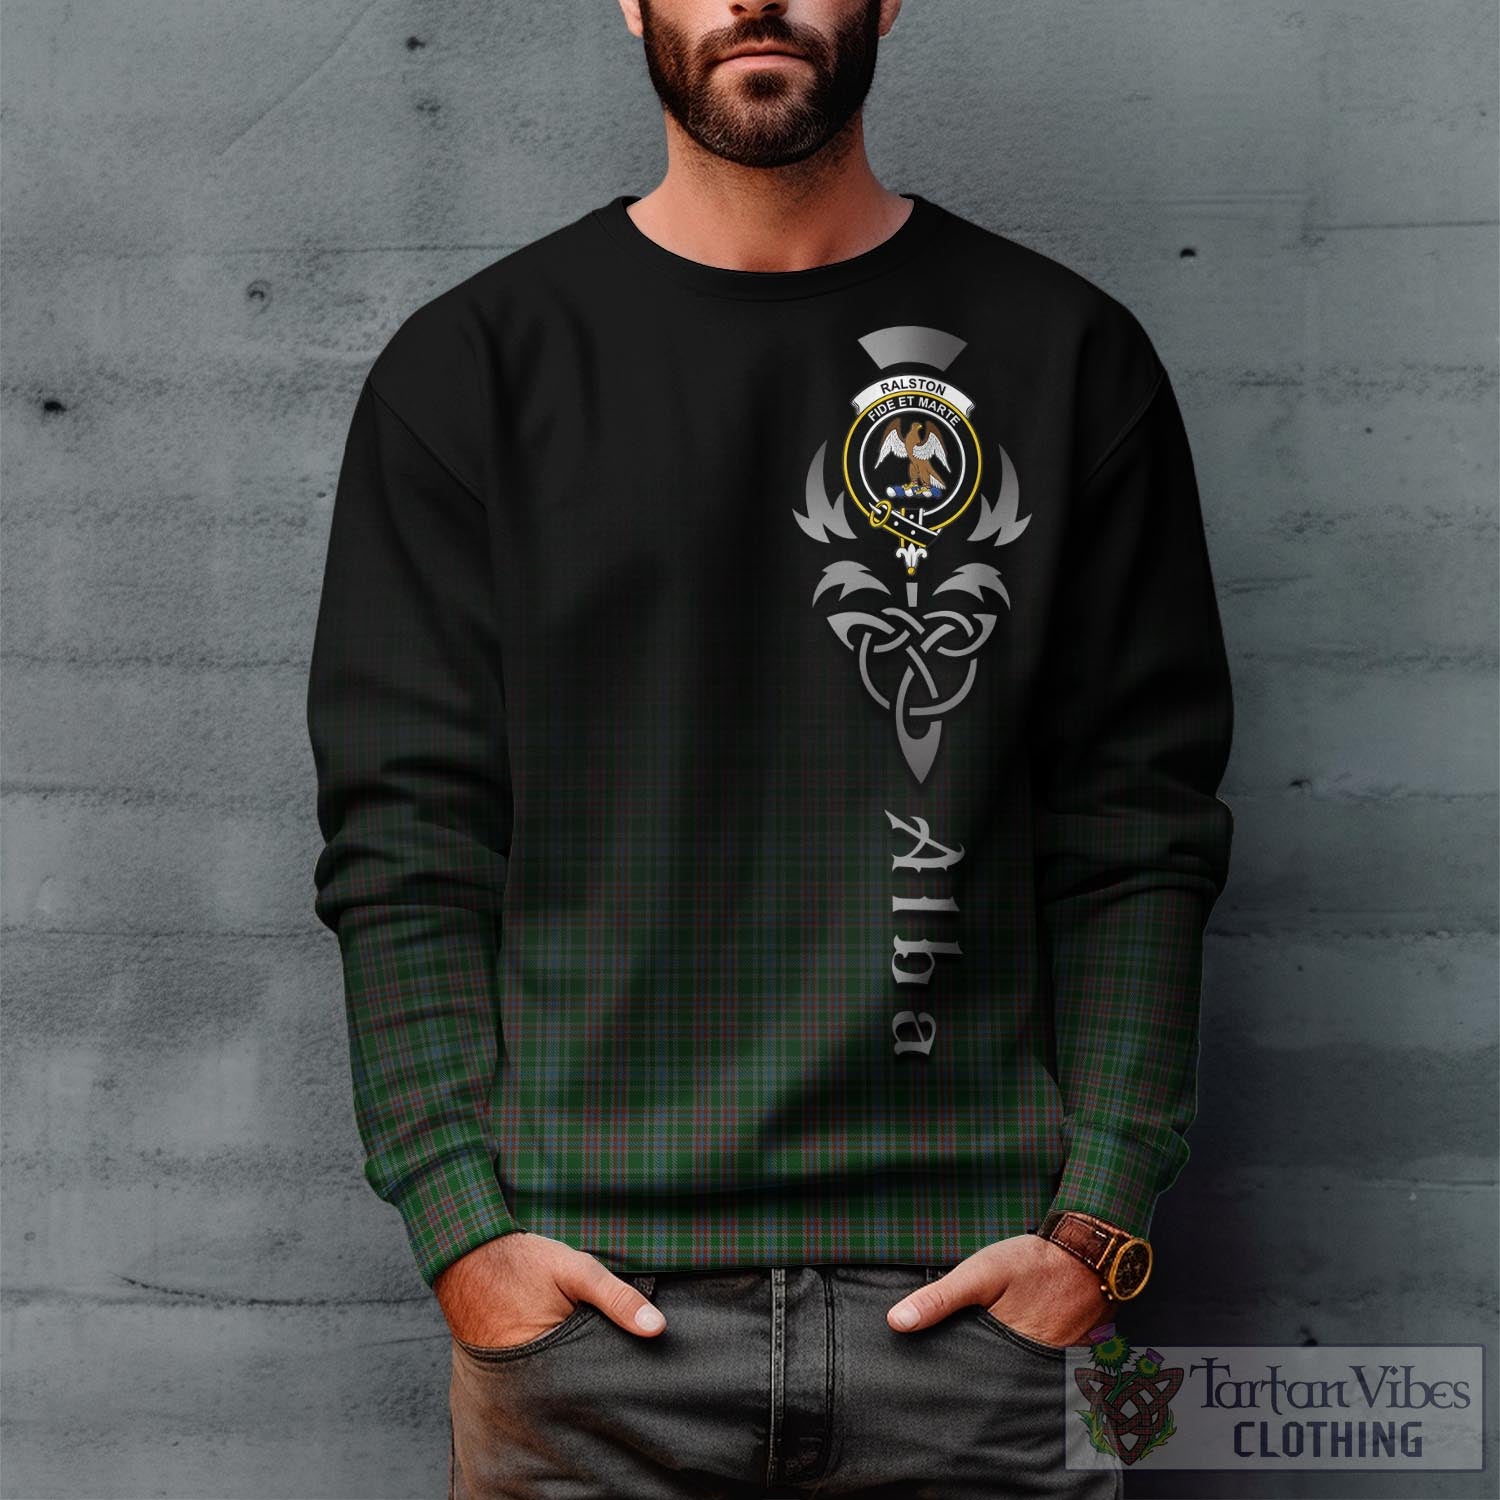 Tartan Vibes Clothing Ralston USA Tartan Sweatshirt Featuring Alba Gu Brath Family Crest Celtic Inspired